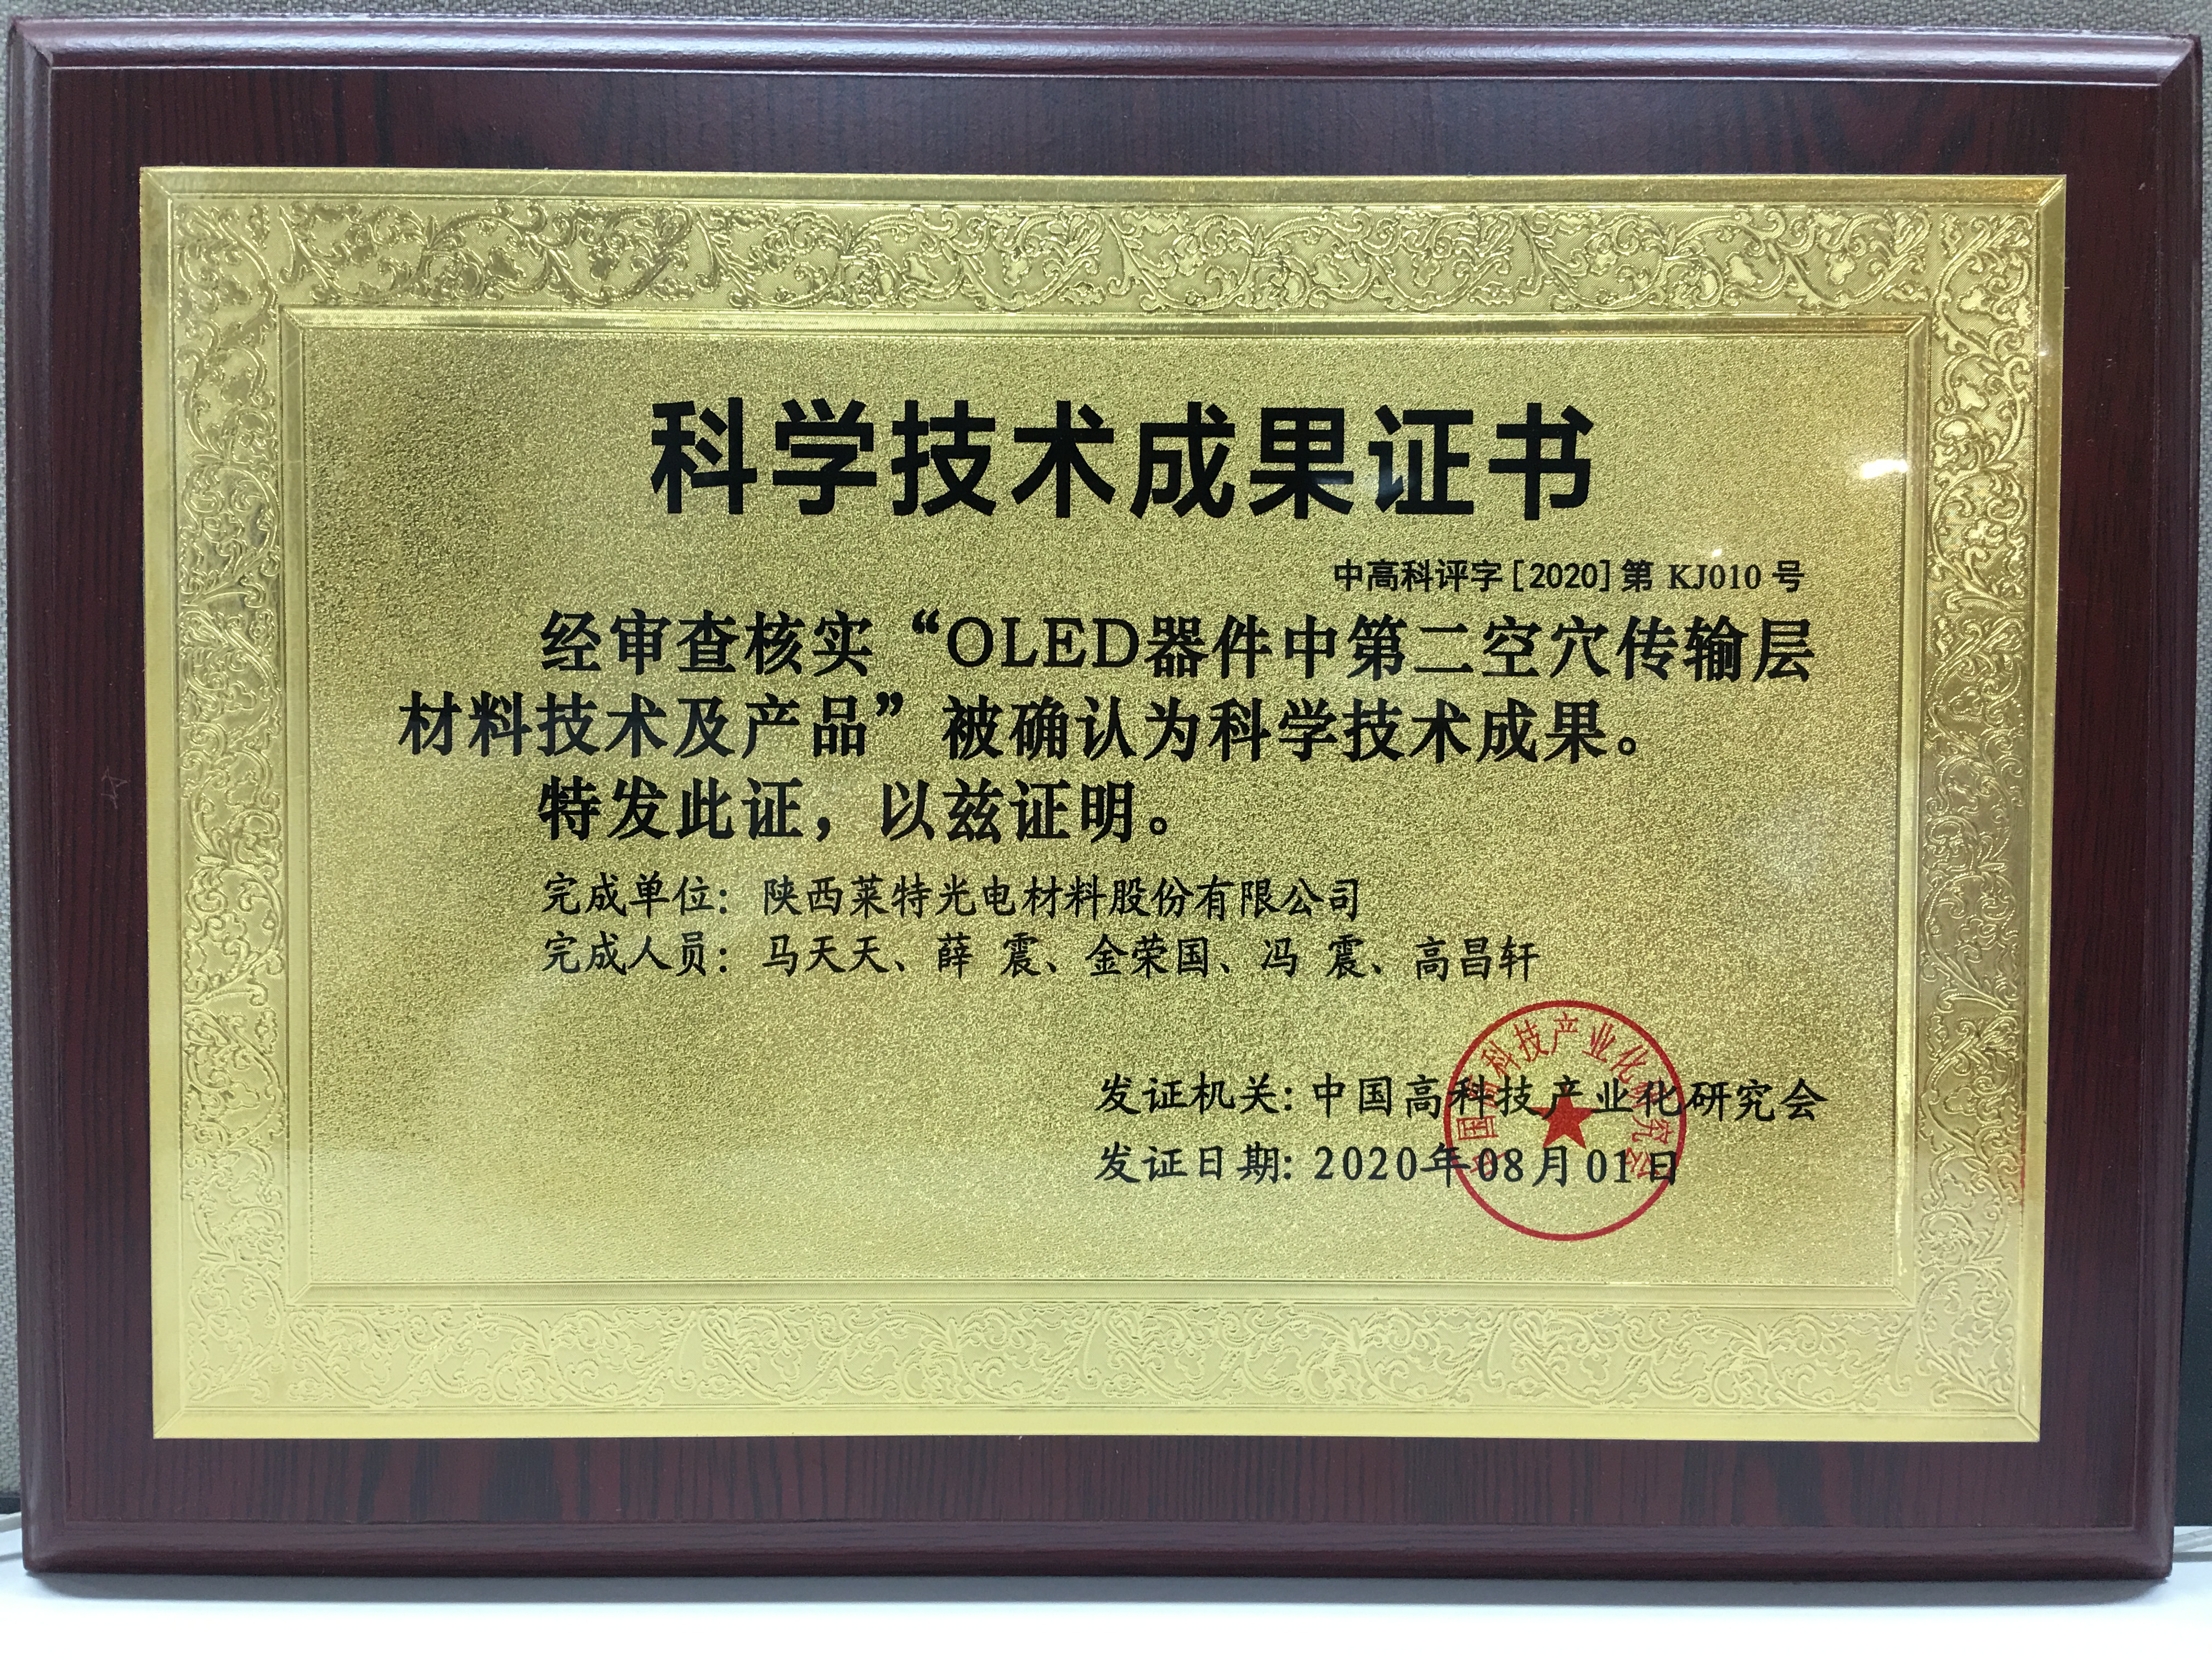 Science & Technology Achievement Certificate